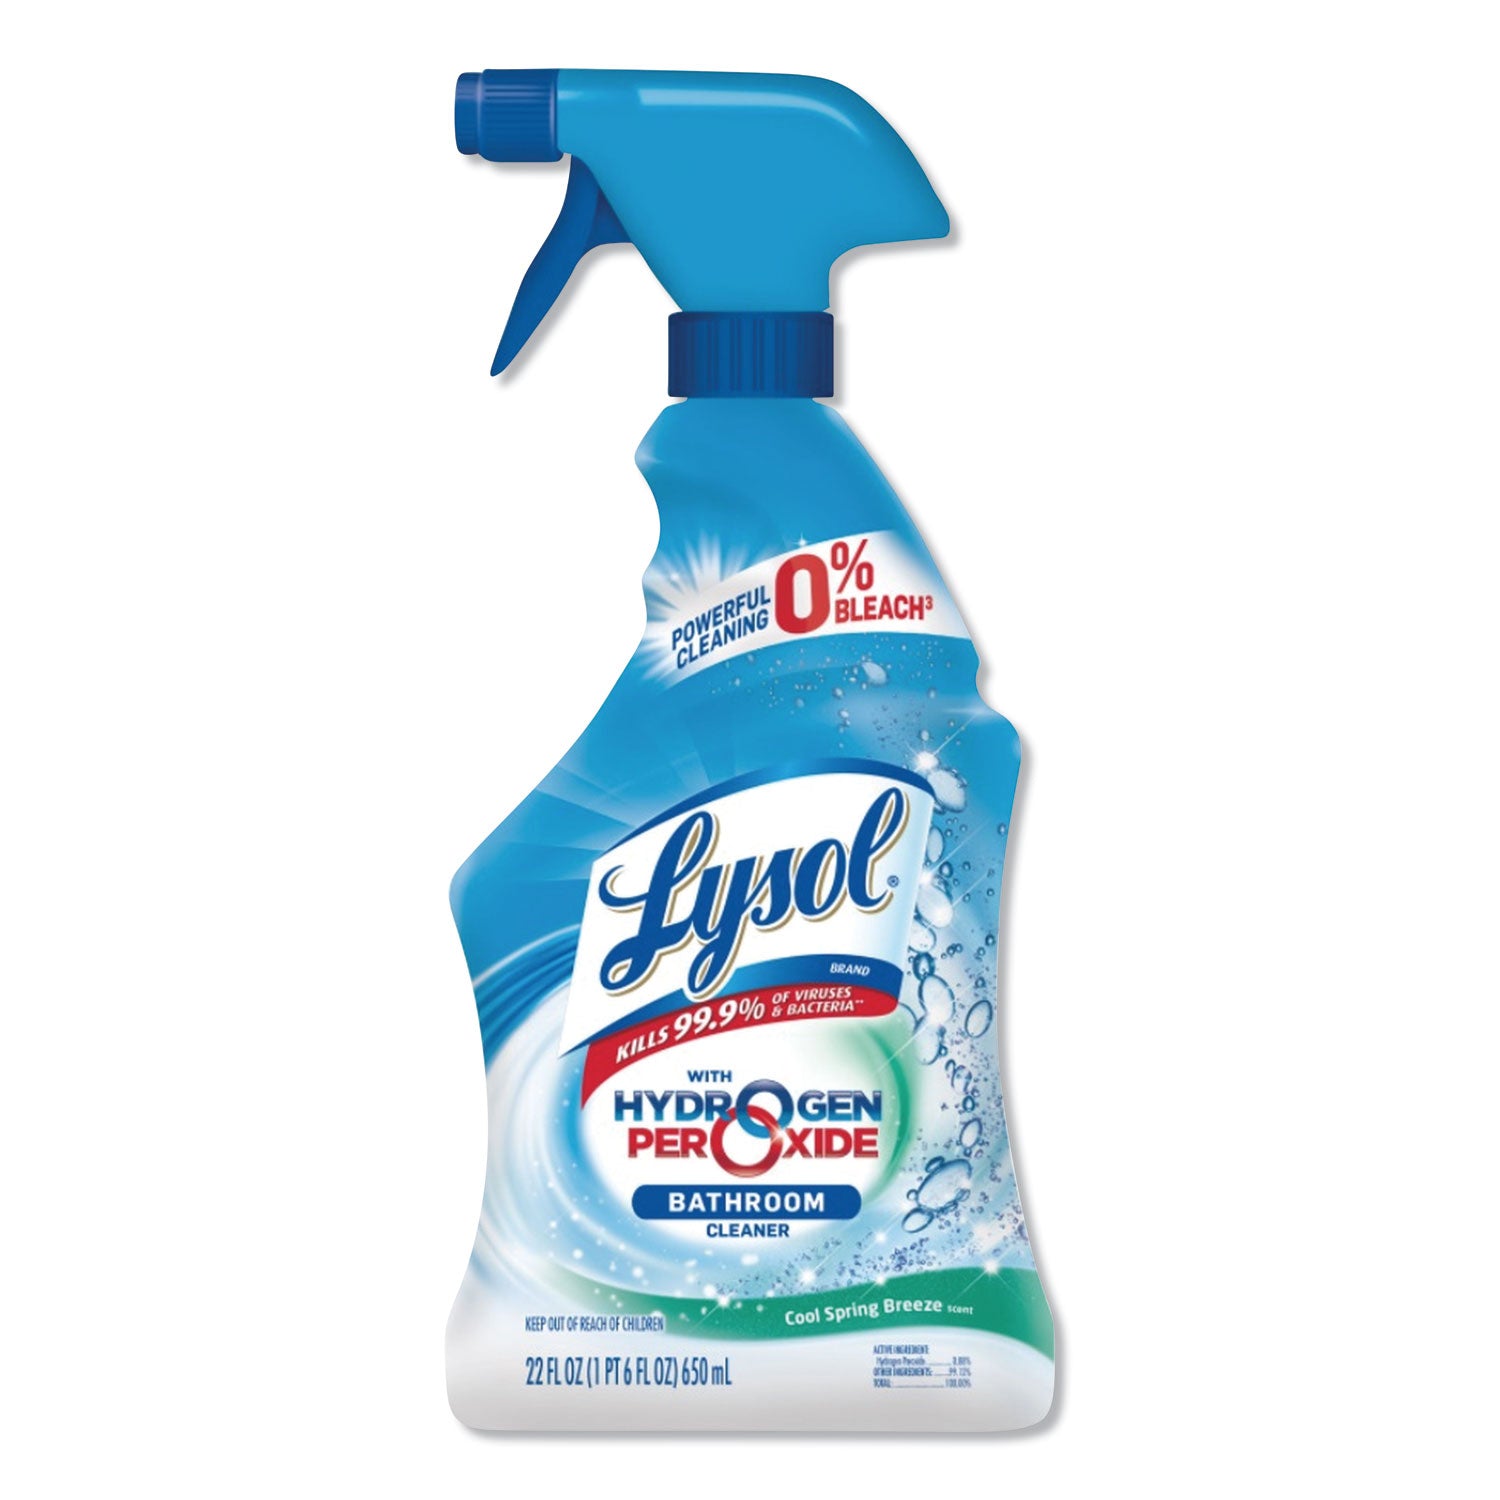 Bathroom Cleaner with Hydrogen Peroxide, Cool Spring Breeze, 22 oz Trigger Spray Bottle - 